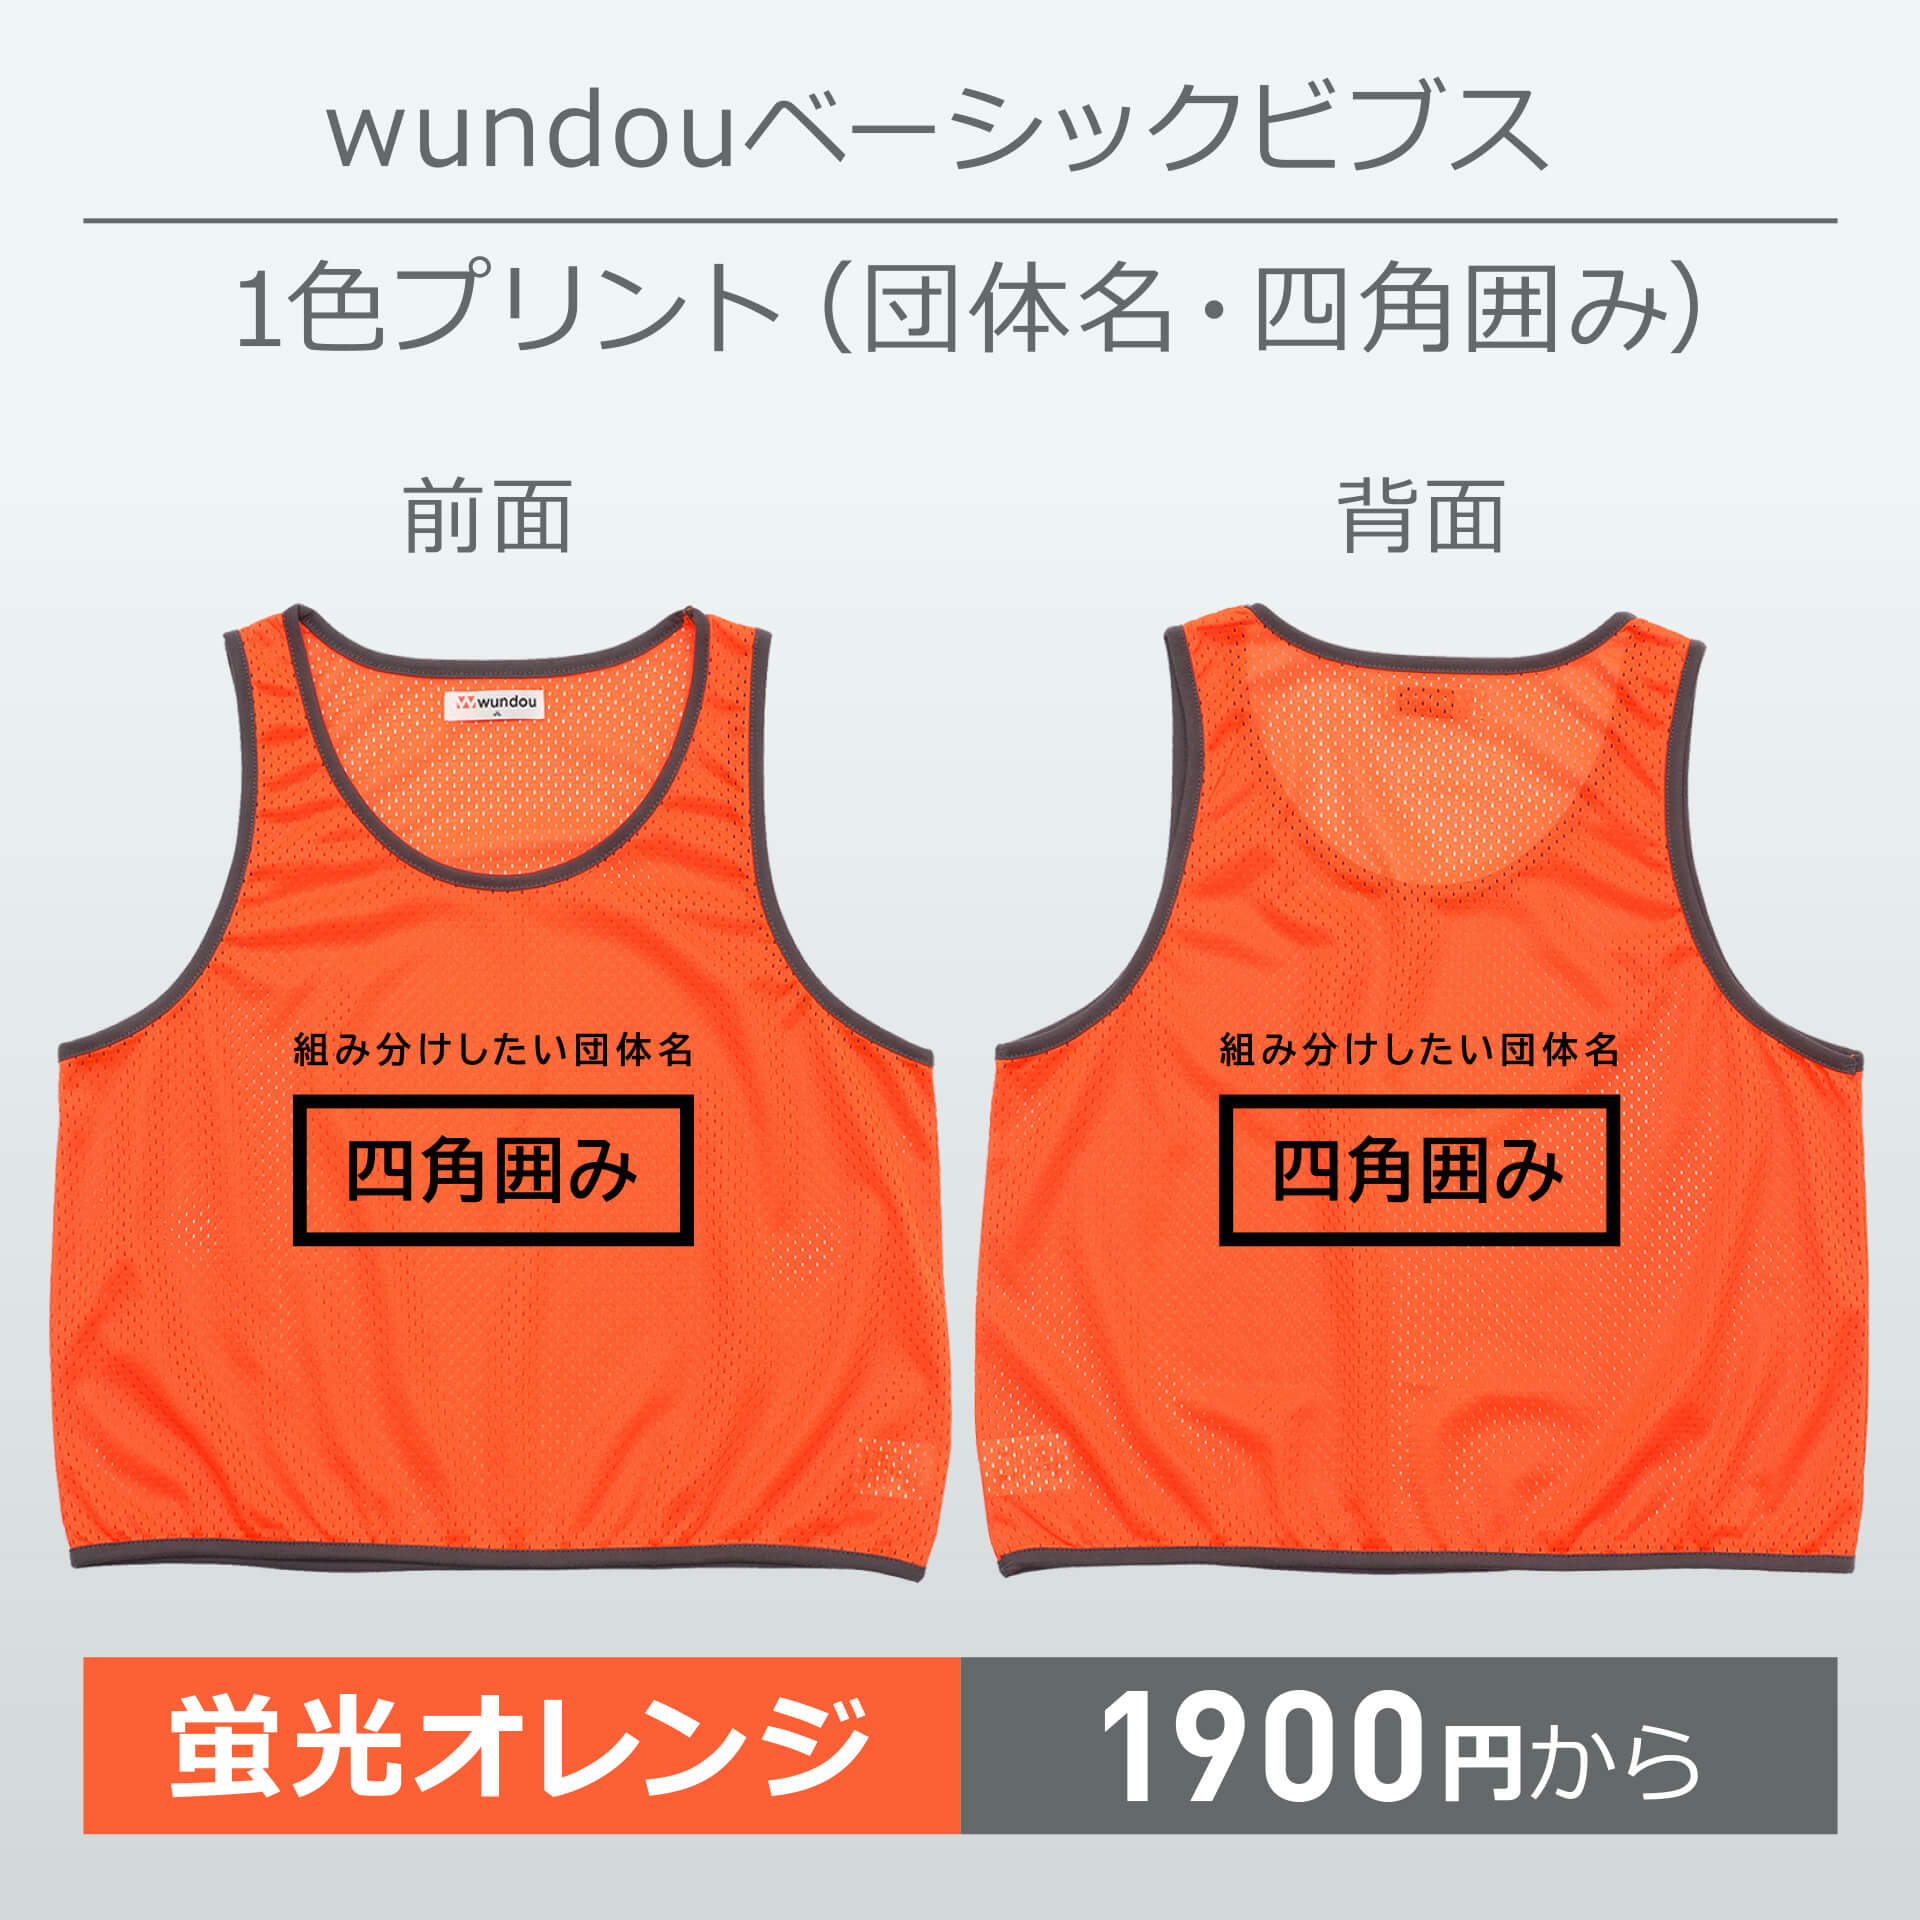 wundou・ベーシックビブス・1色プリント(団体名・四角囲み)・蛍光オレンジ